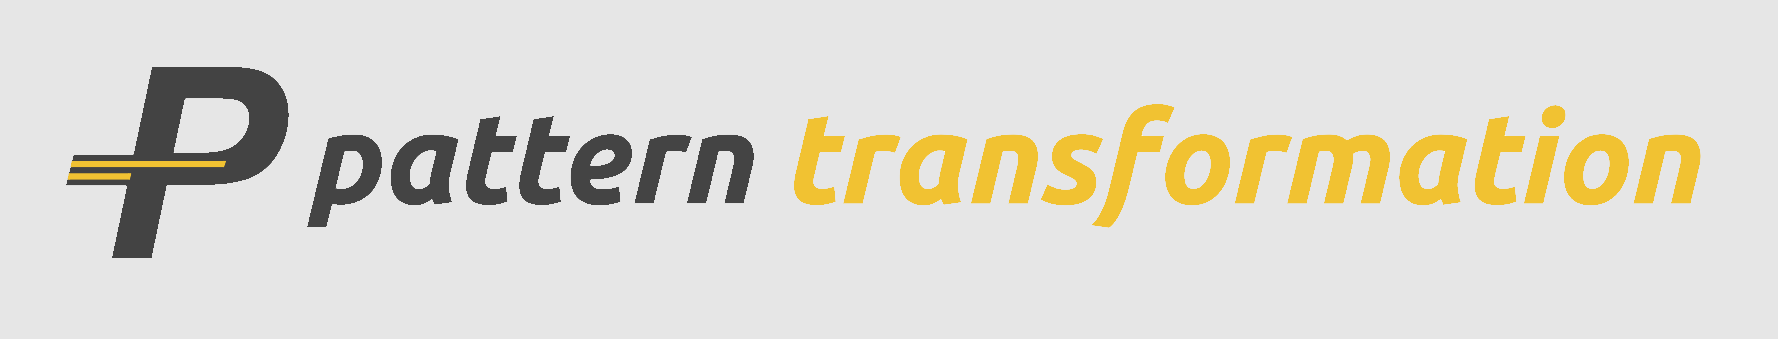 Pattern Transformation logo